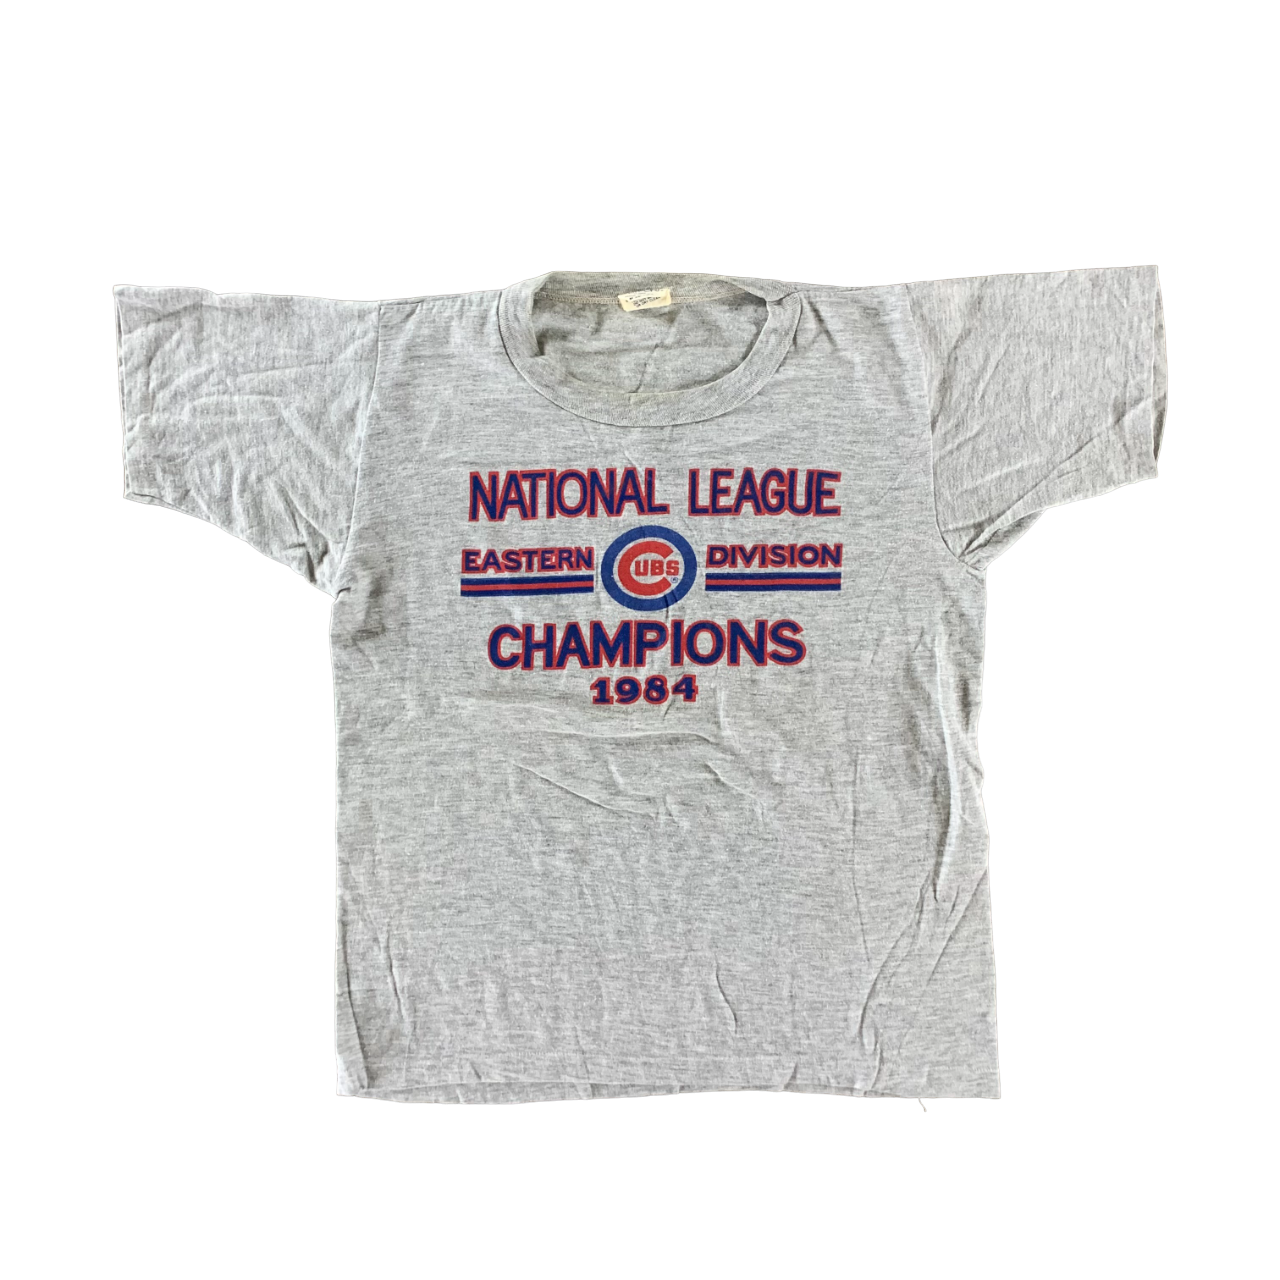 Vintage 1984 Chicago Cubs T-shirt size Medium